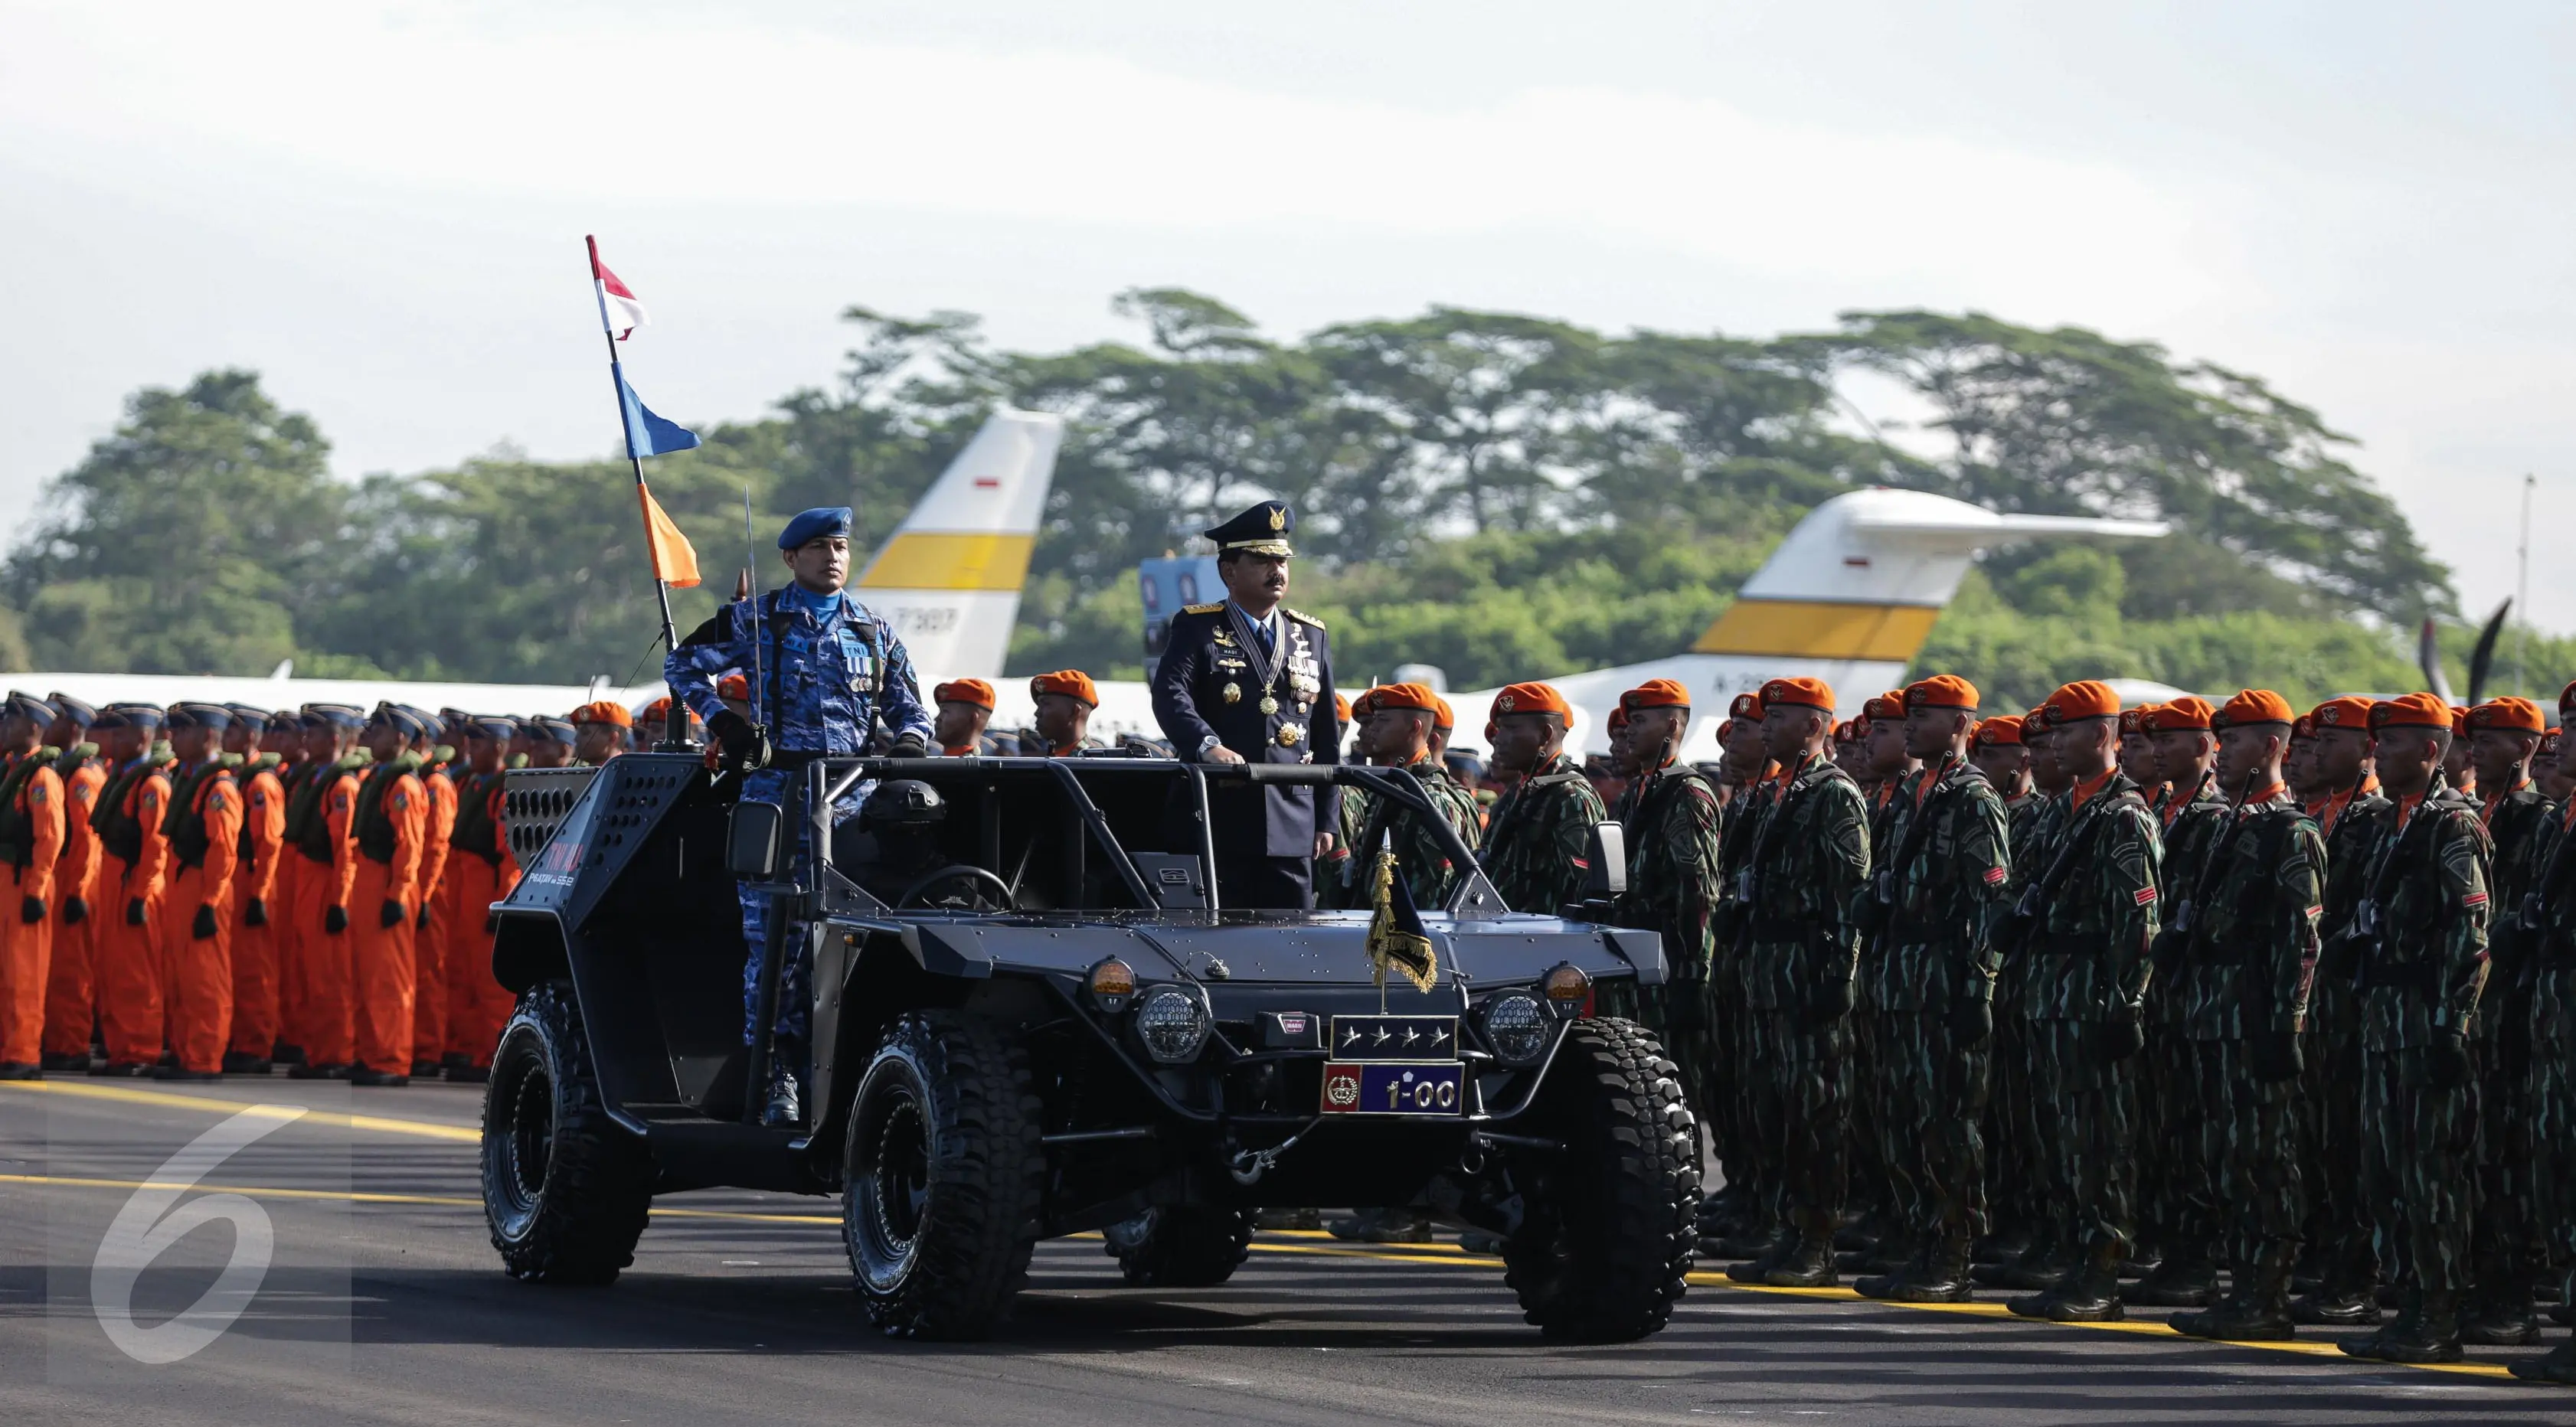 Marsekal TNI Hadi Tjahjanto memeriksa pasukan dengan menaiki mobil komando saat upacara peringatan Hari Ulang Tahun (HUT) ke-71 di Taxi Way Skuadron Udara Bandara Halim Perdanakusuma, Jakarta, Minggu (9/4). (Liputan6.com/Faizal Fanani)